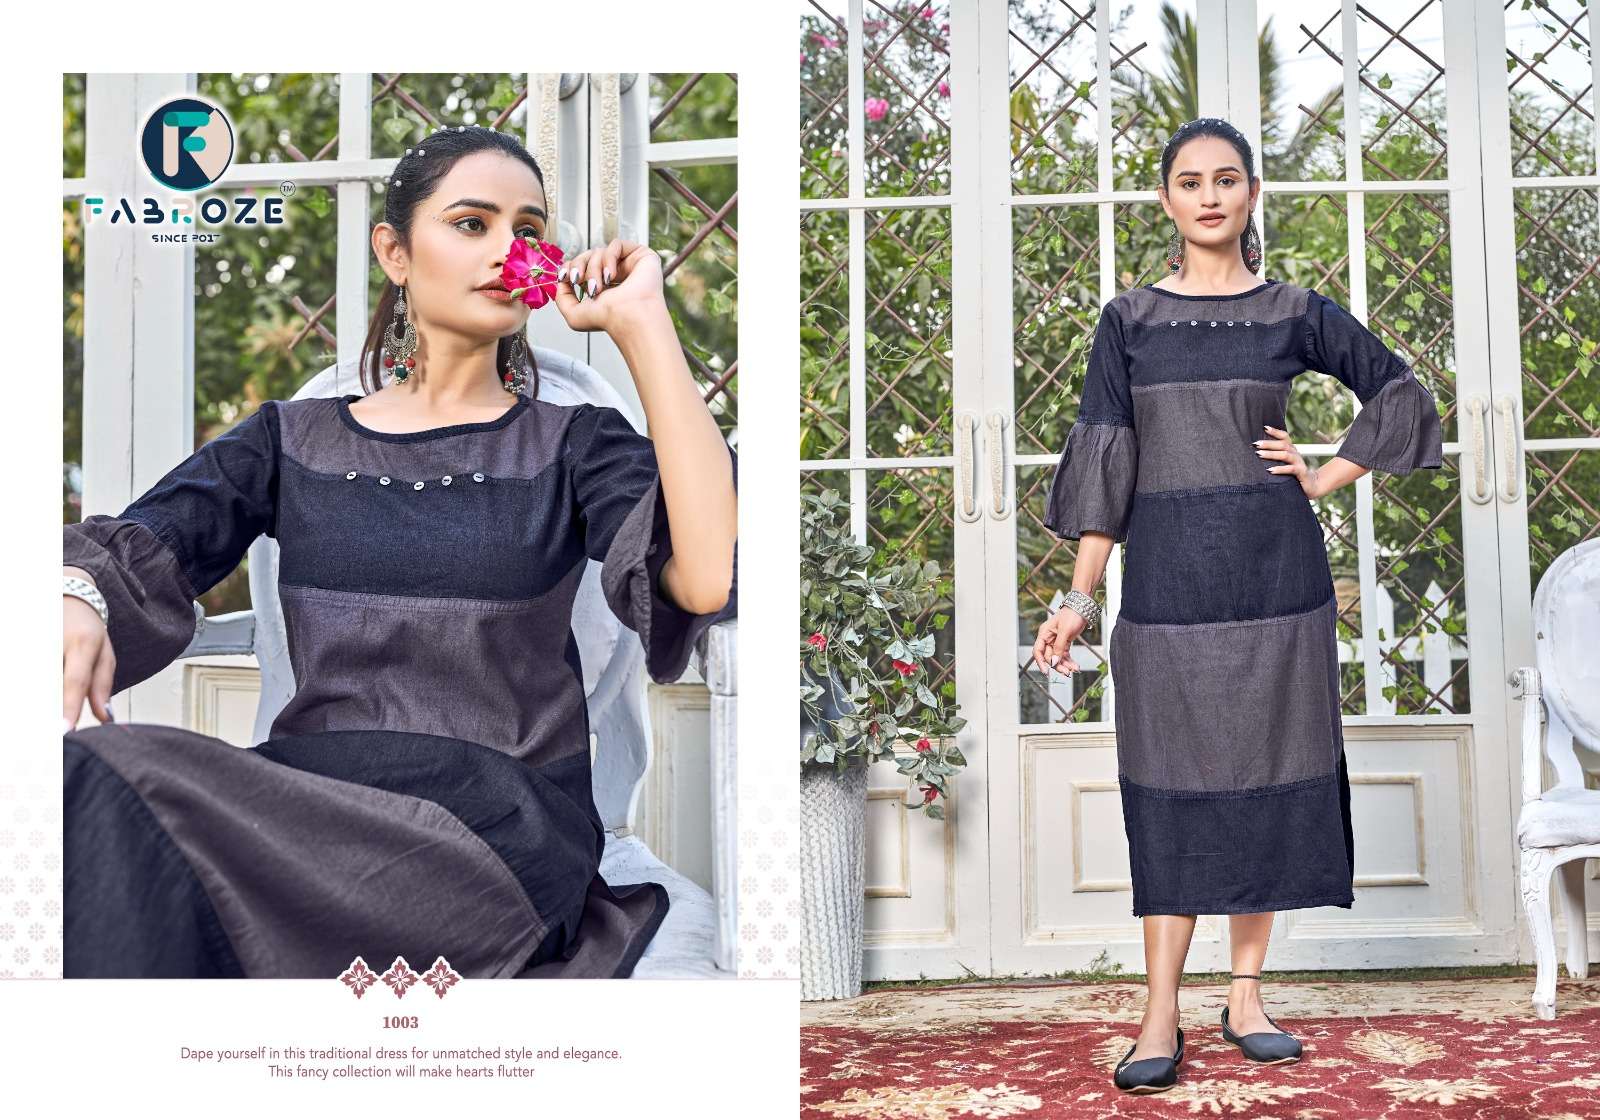 Lakshya Vol-1 By Fabroze 1001 To 1007 Series Beautiful Stylish Fancy Colorful Casual Wear & Ethnic Wear Cotton Denim Kurtis At Wholesale Price